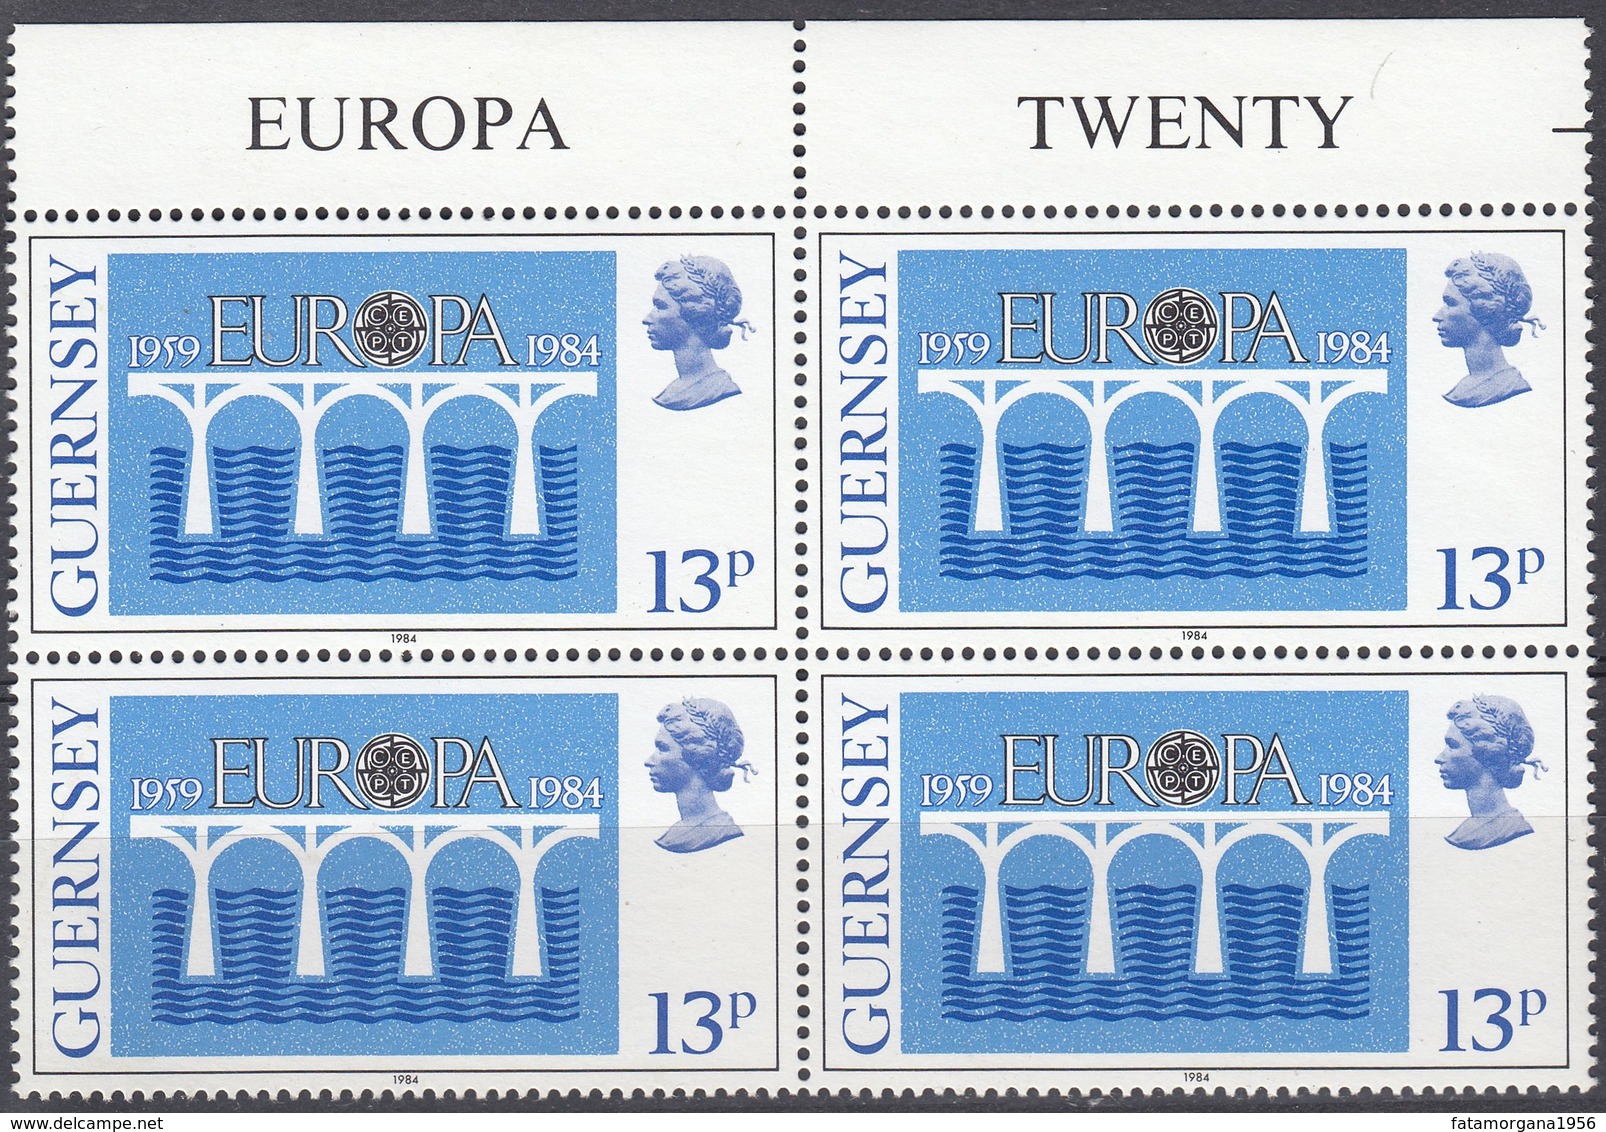 GUERNSEY - 1984 - Serie Completa In Quartine Nuove MNH Con Margine Di Foglio: Yvert 286/287, Europa. - Guernsey